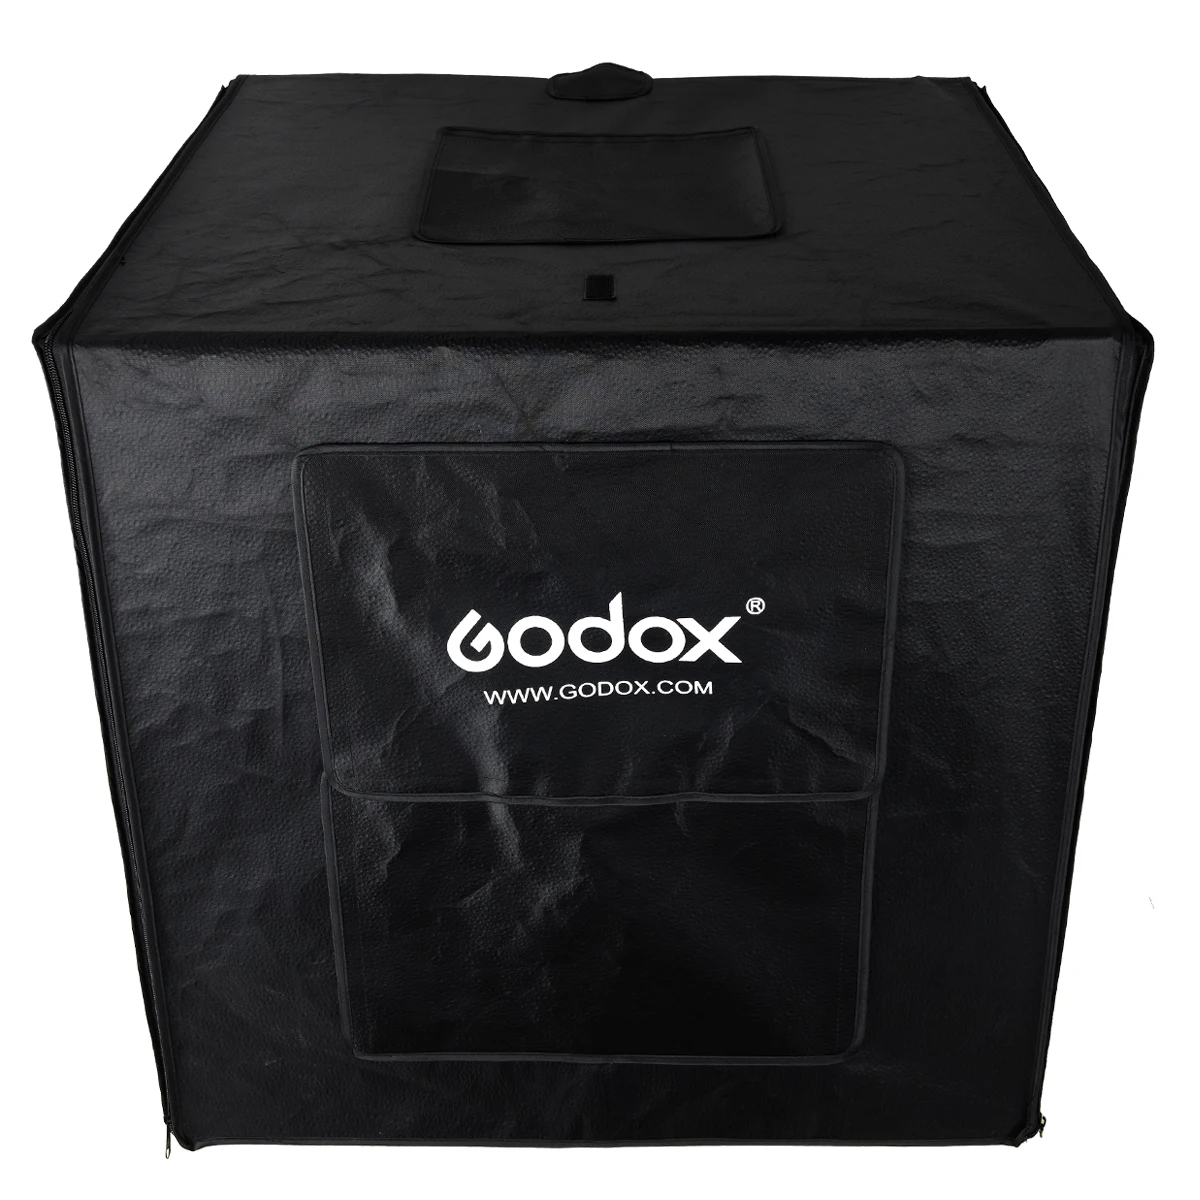 Godox-写真スタジオ撮影ランプ,写真撮影用ライトボックス,40〜80cm AliExpress Mobile